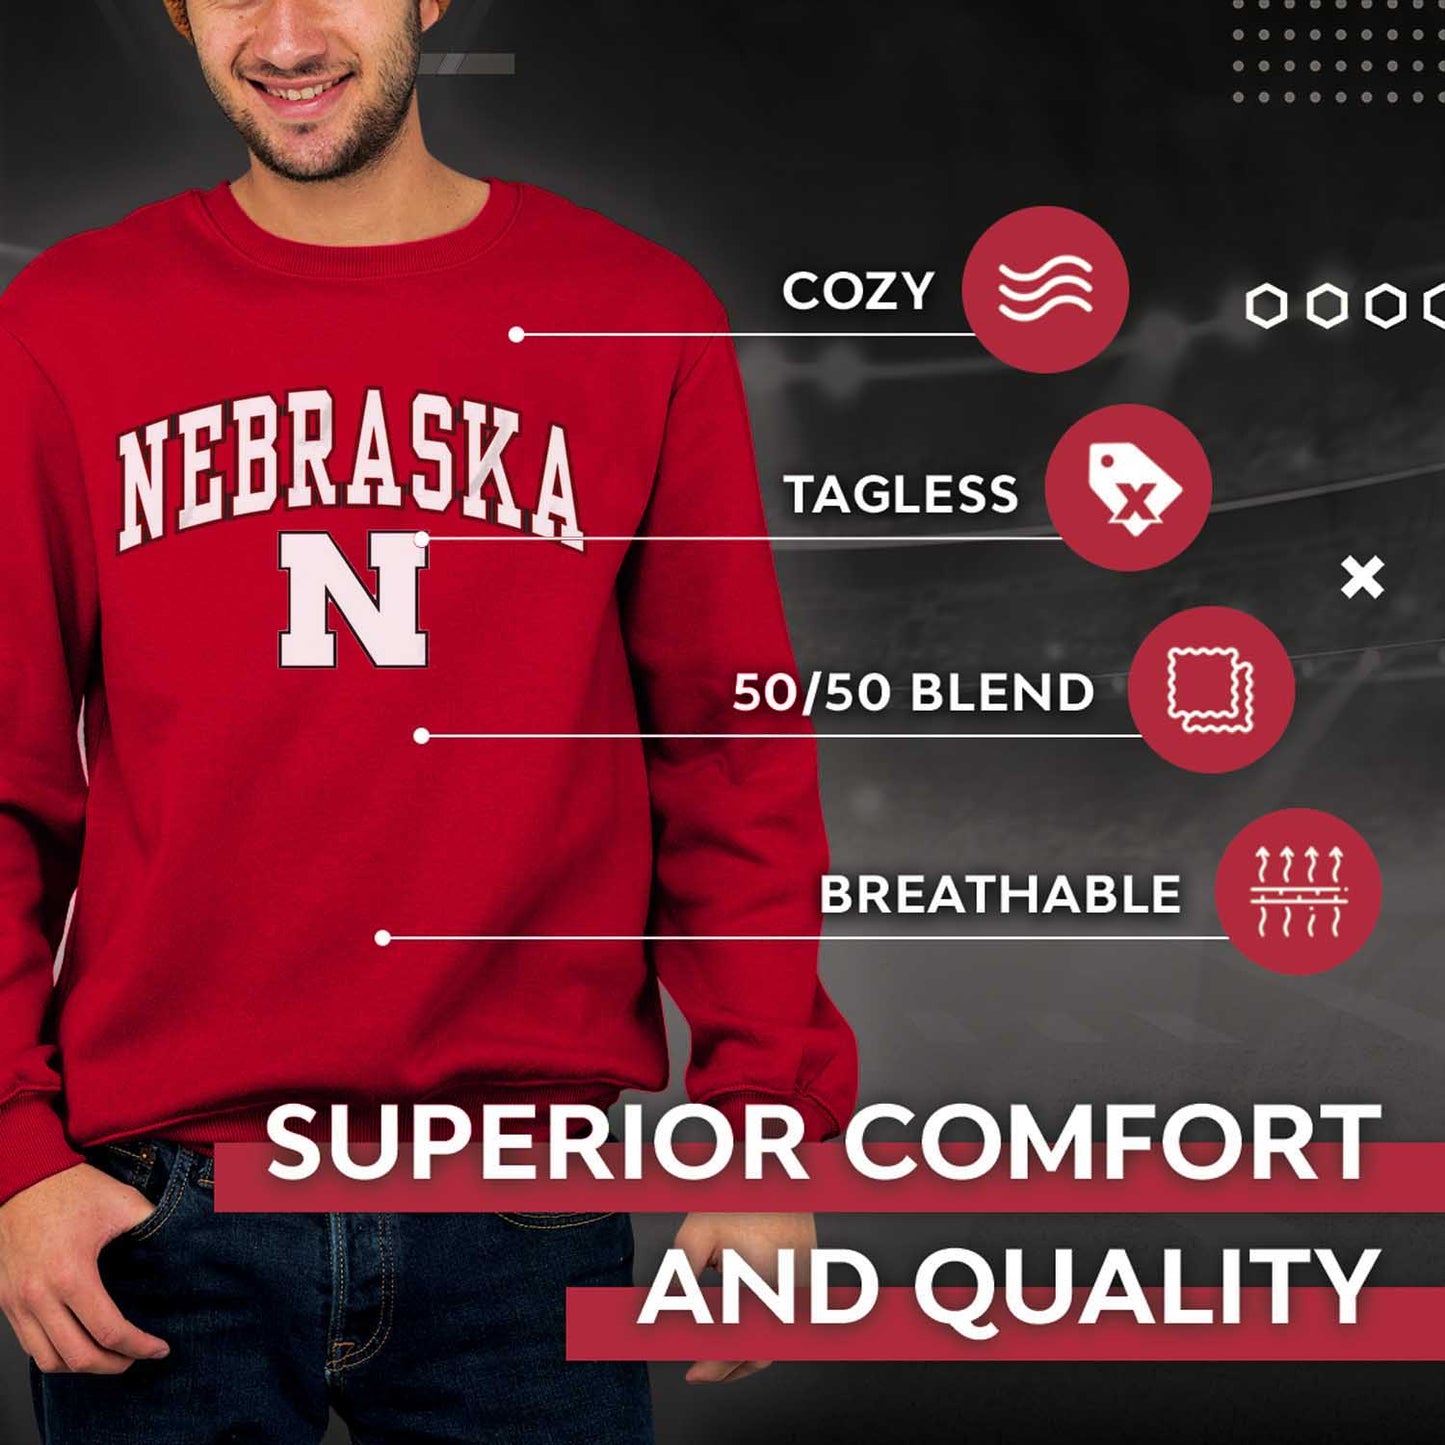 Nebraska Cornhuskers Adult Arch & Logo Soft Style Gameday Crewneck Sweatshirt - Red